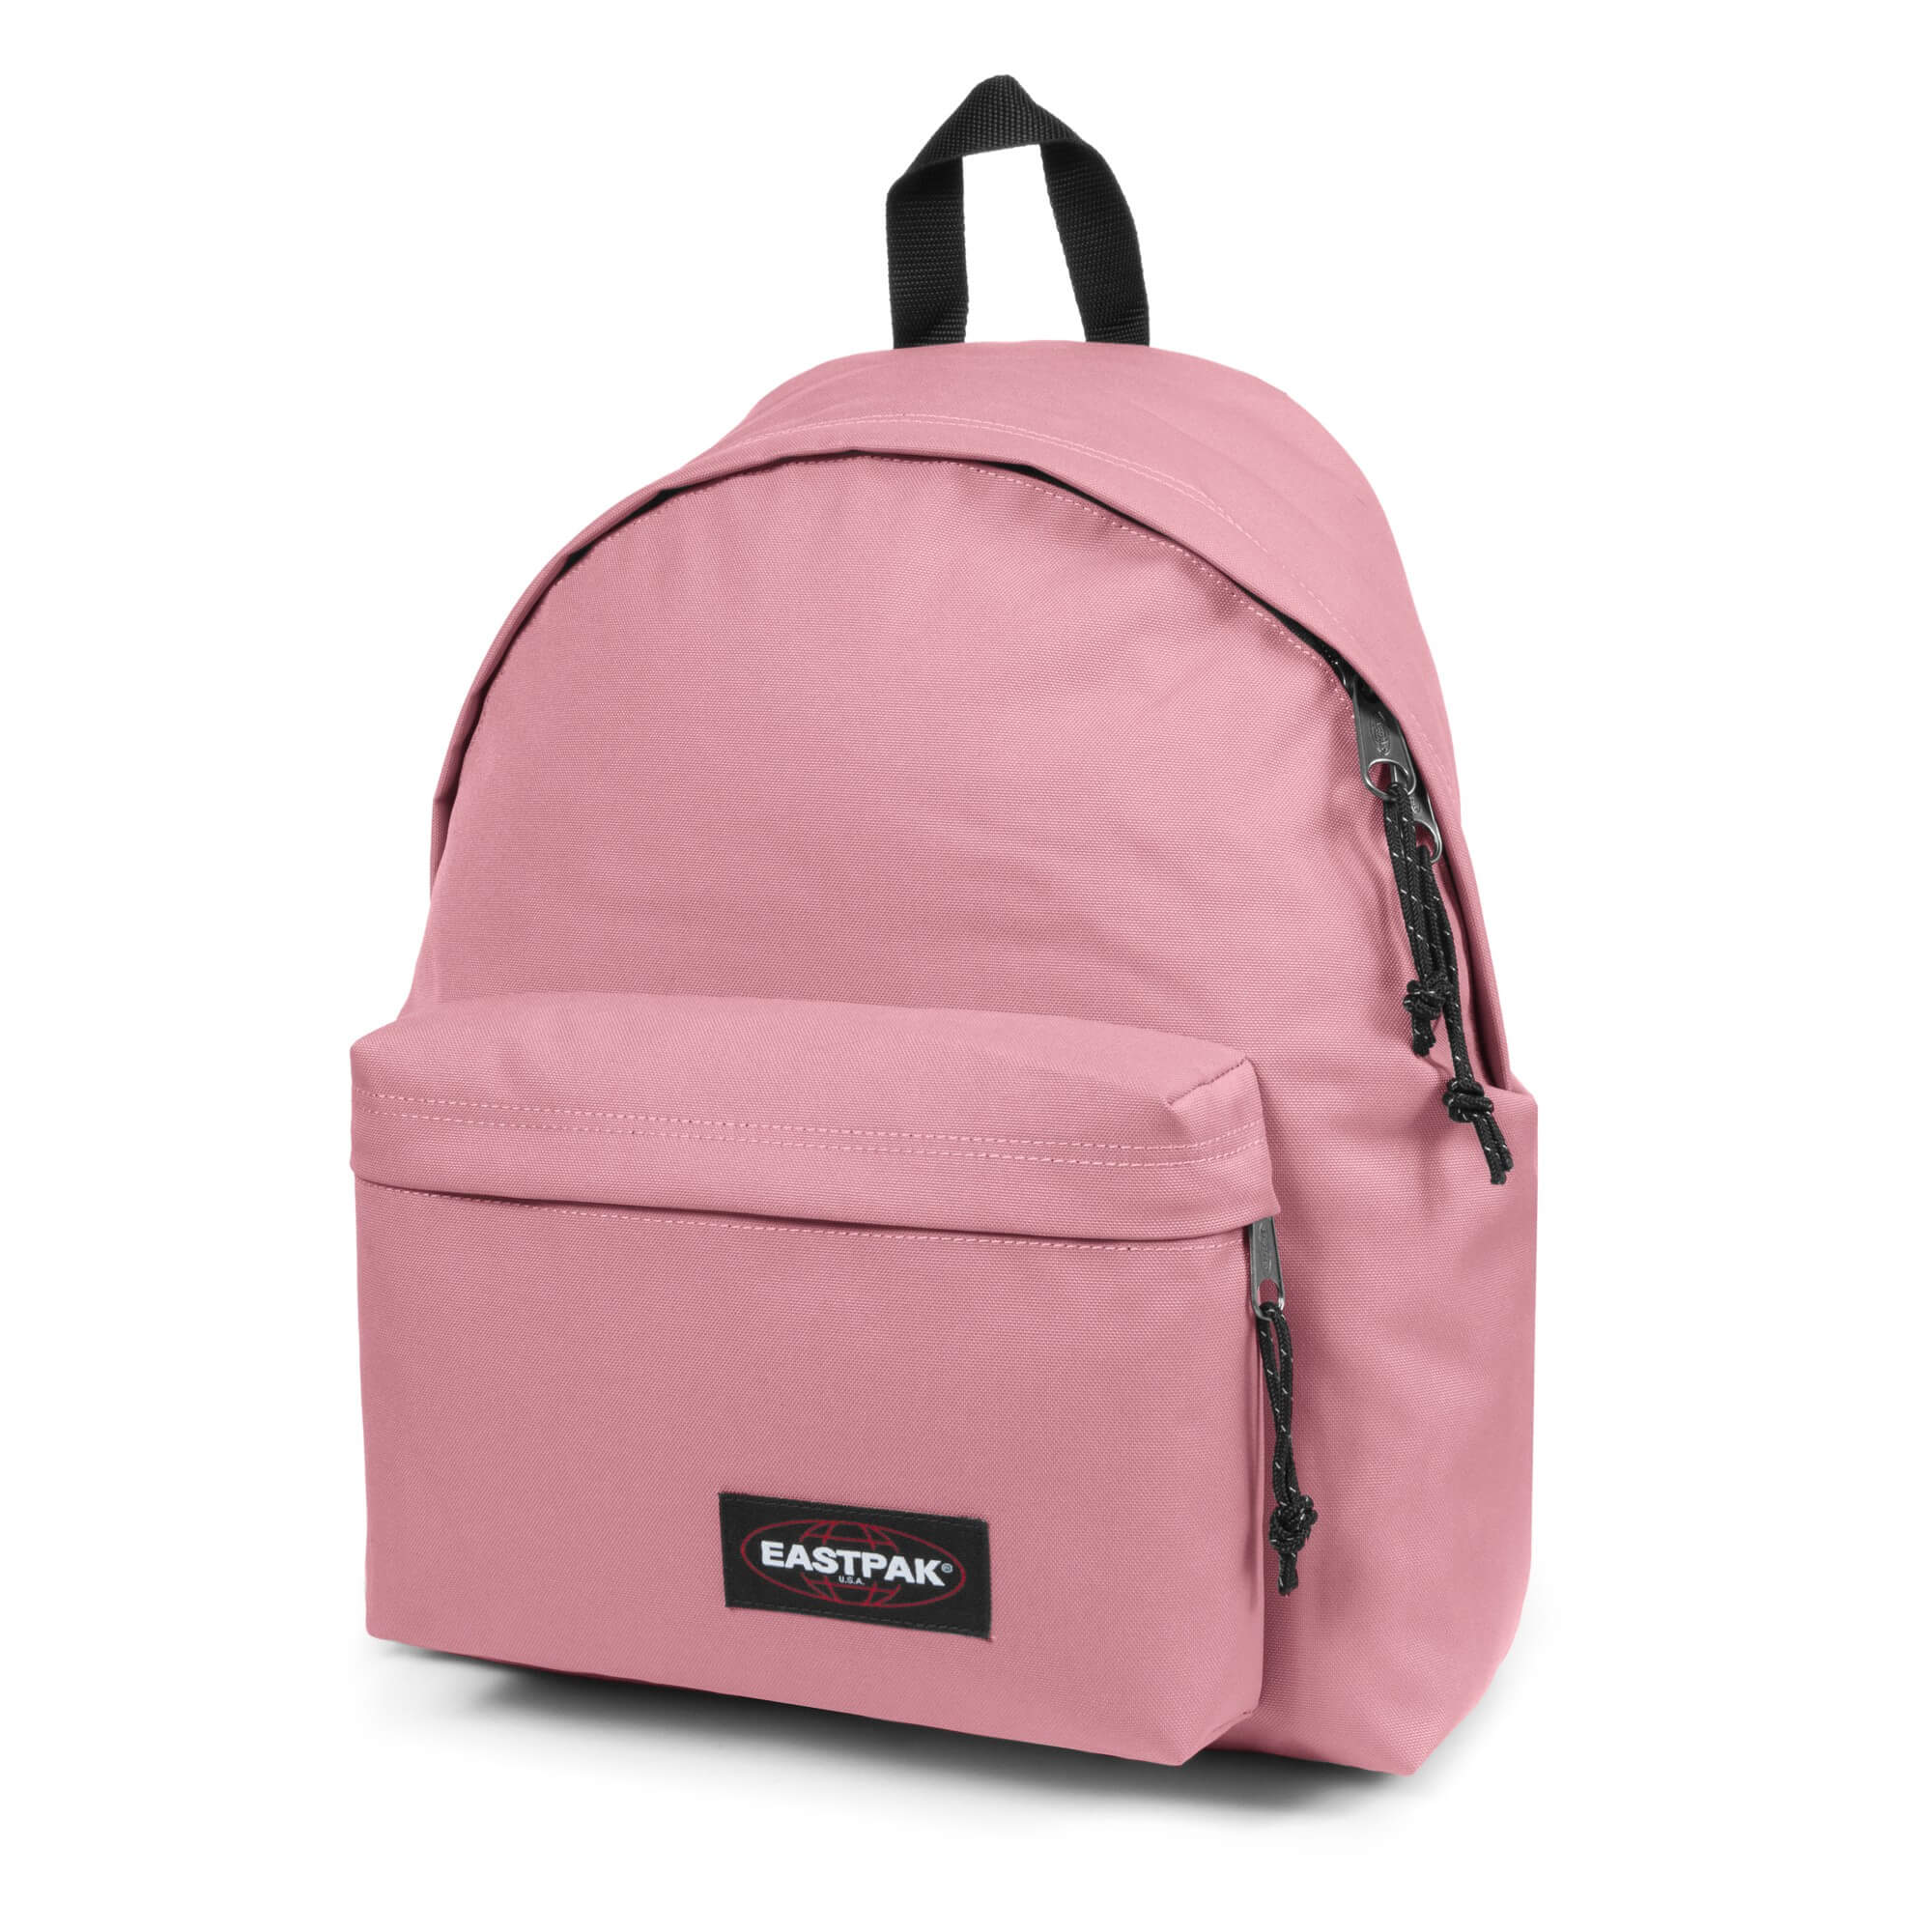 EASTPAK Authentic Backpack K043-ORBIT